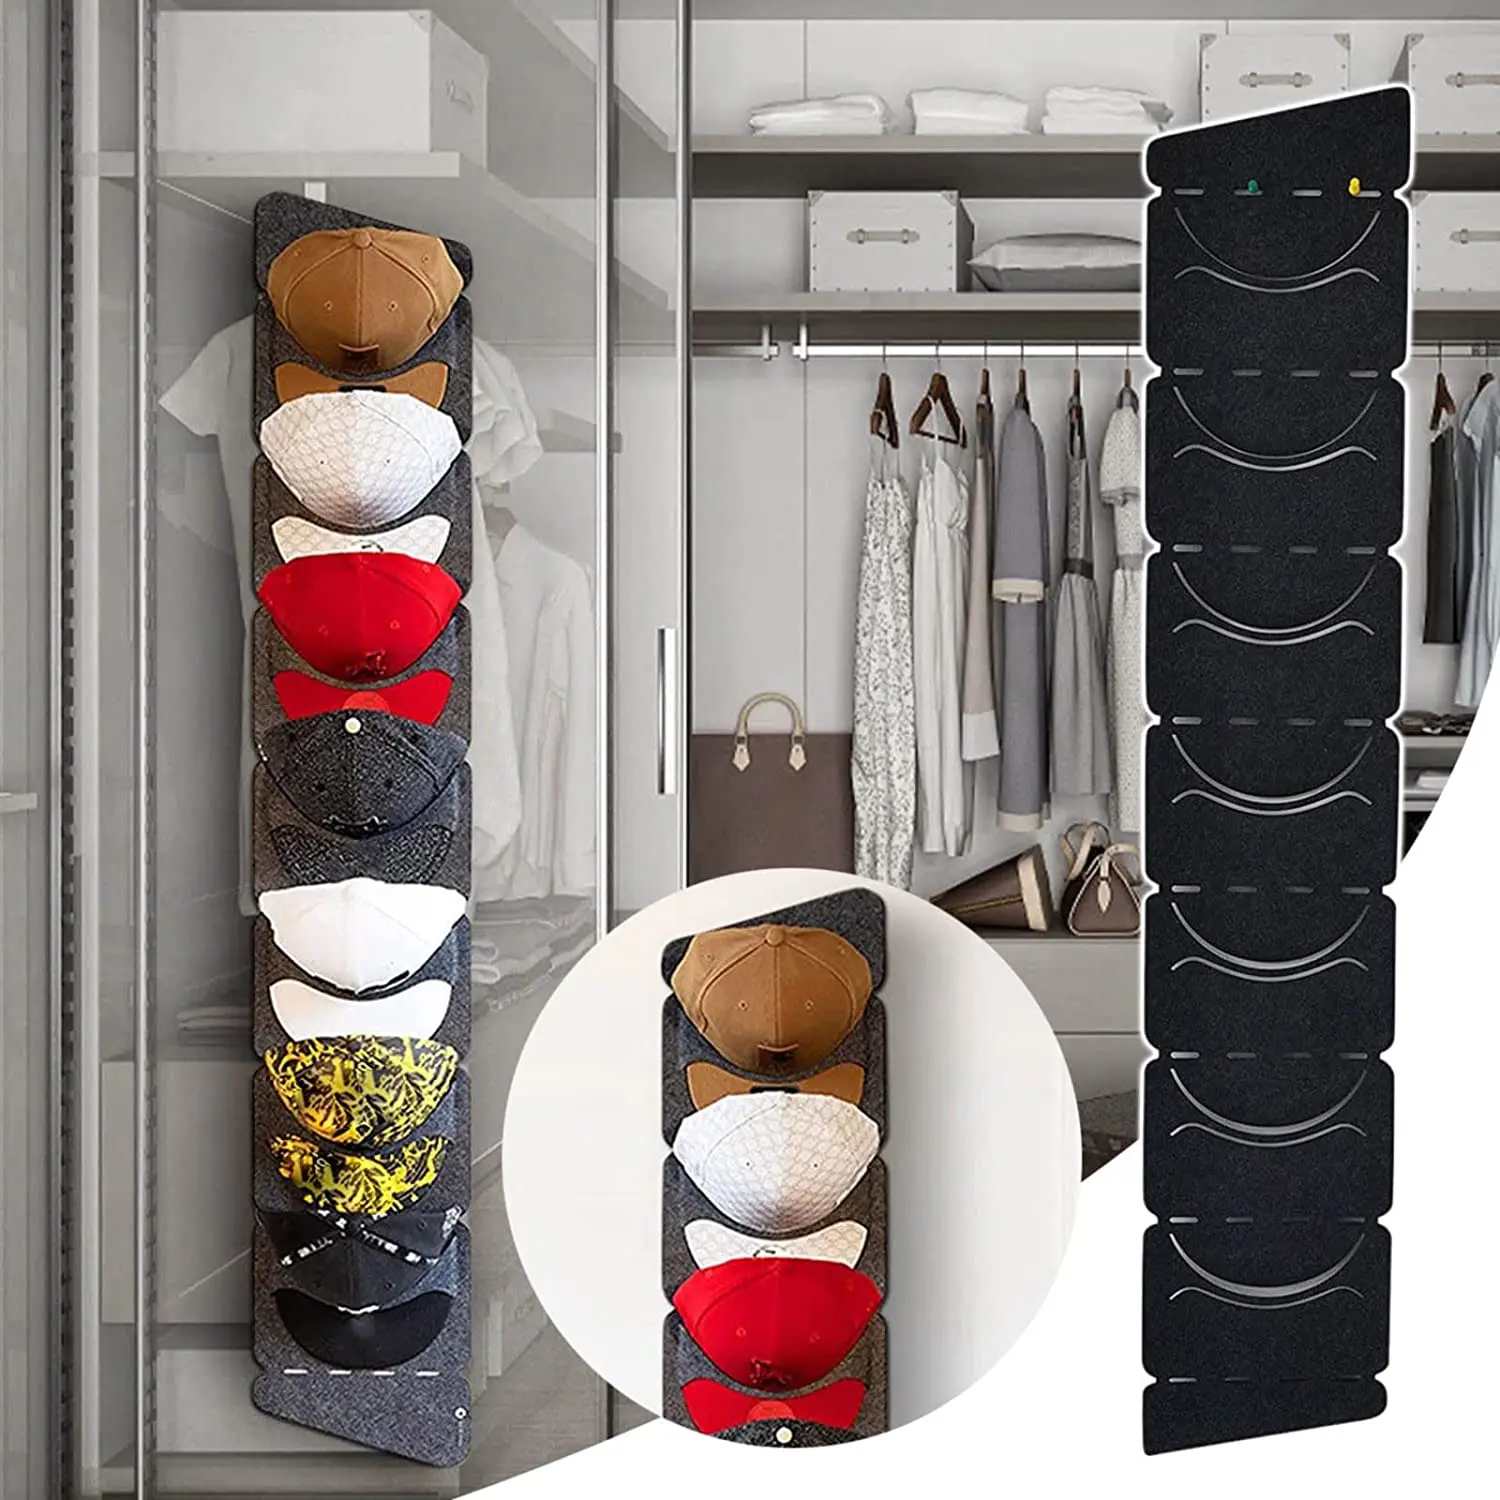 Cap Rack Holder Storage Organizer Door Adjustable Collection Display Strap, Size: 1 Piece, Black